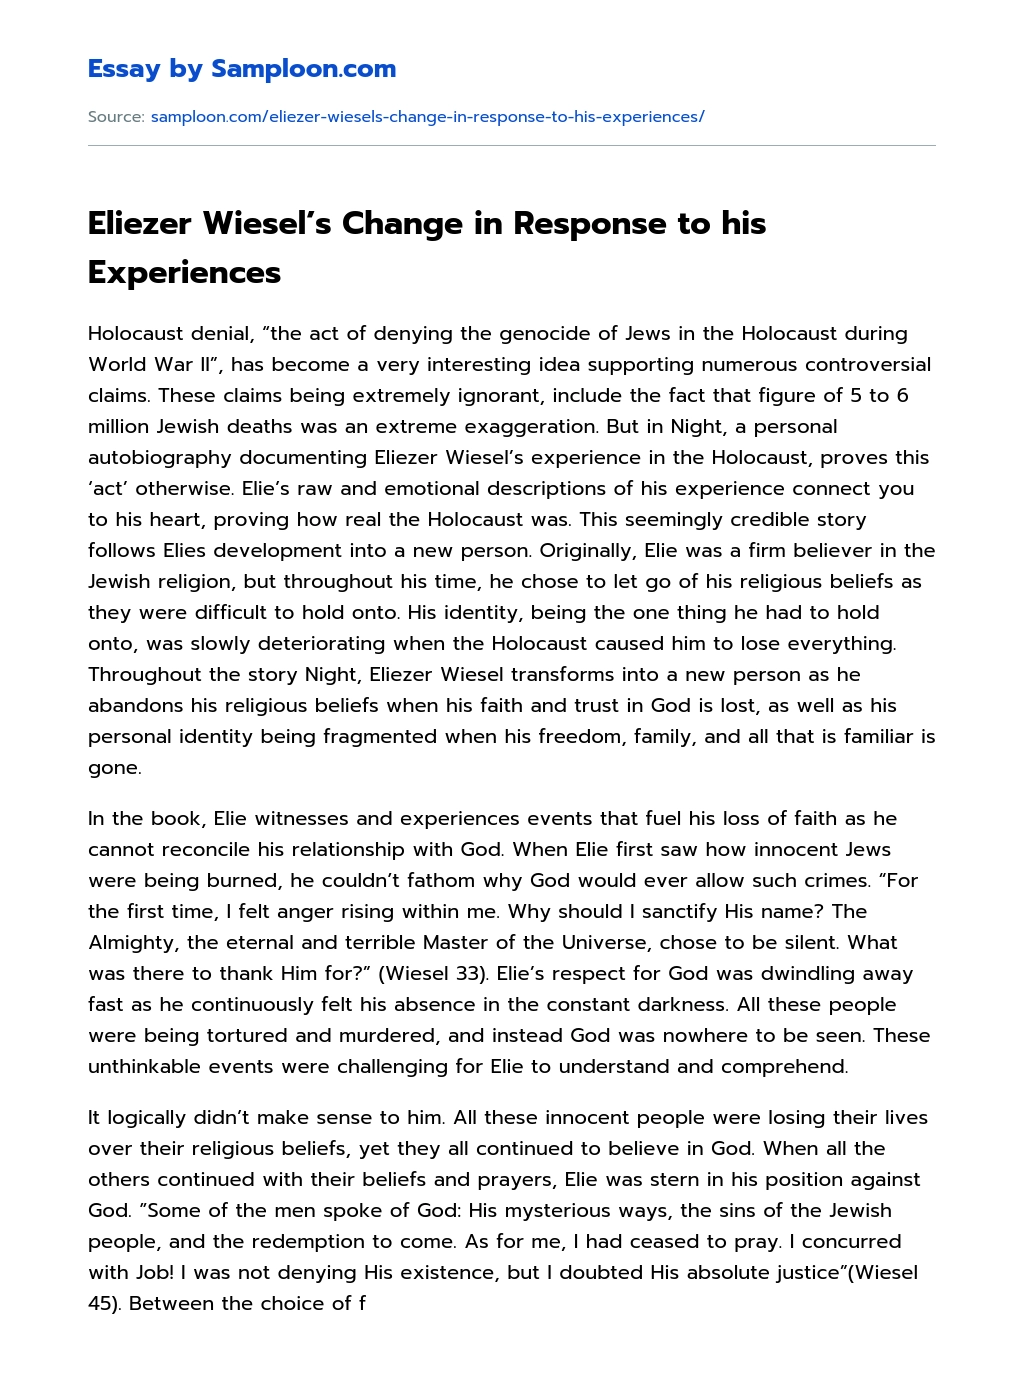 Eliezer Wiesel’s Change in Response to his Experiences essay